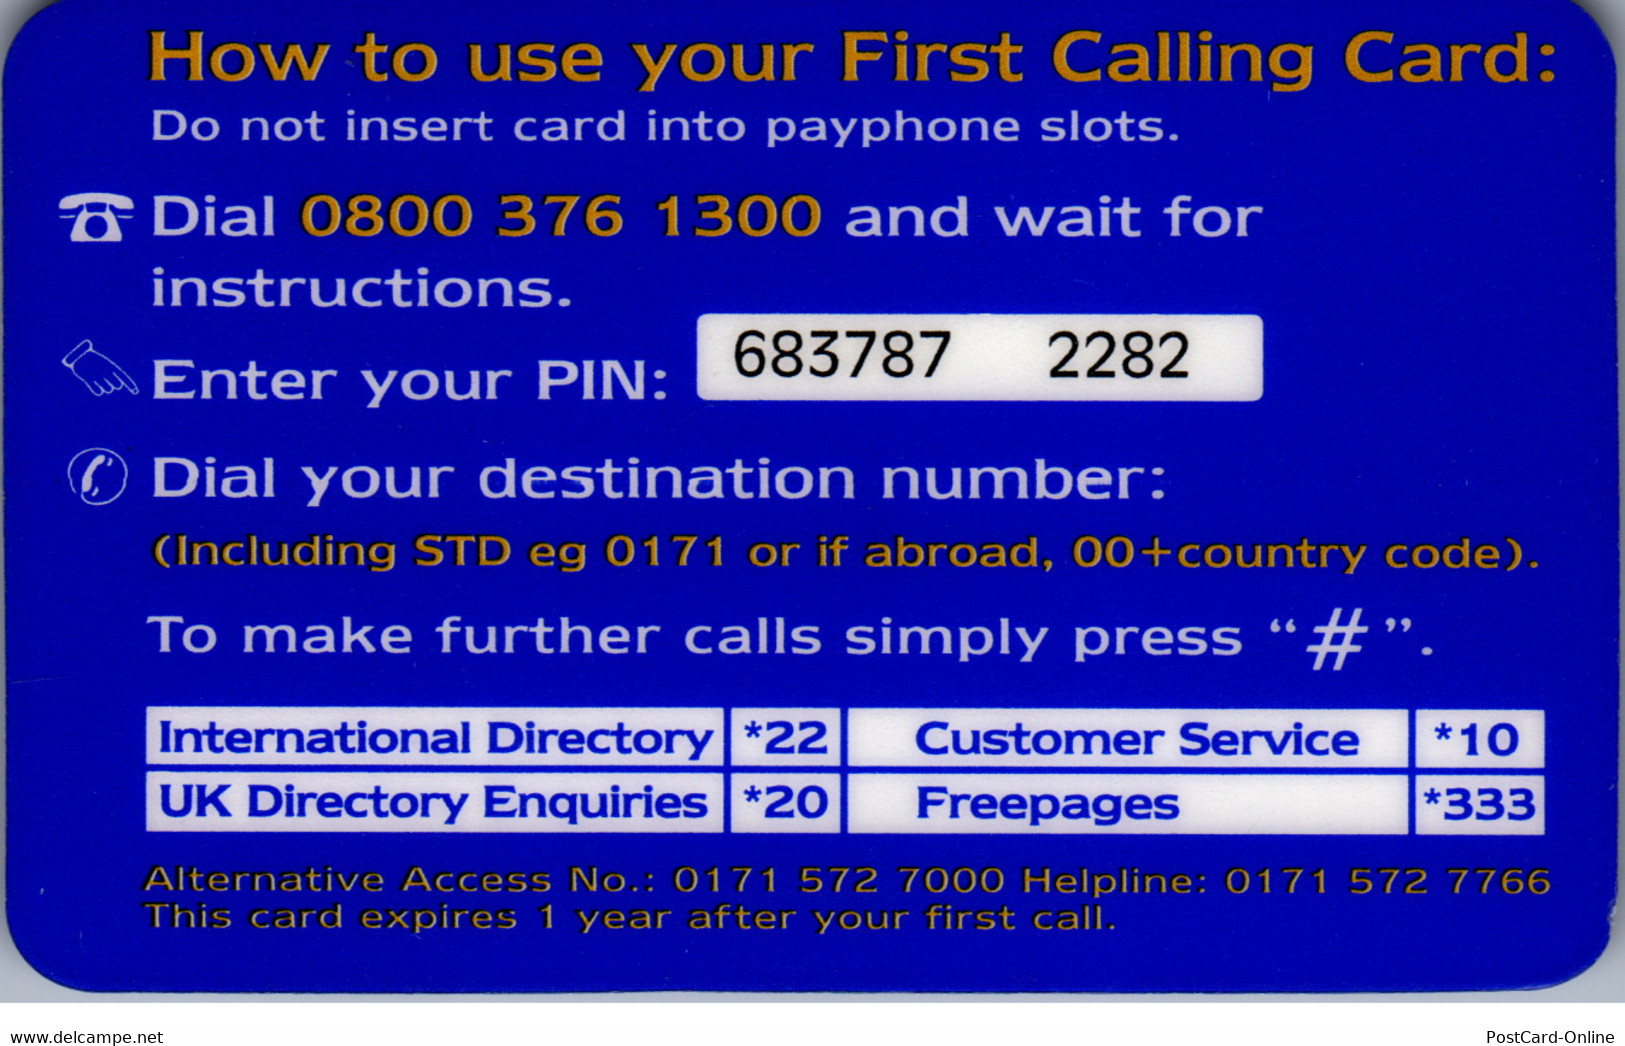 17494 - Großbritannien - First Telecom , First Calling Card - BT Kaarten Voor Hele Wereld (Vooraf Betaald)